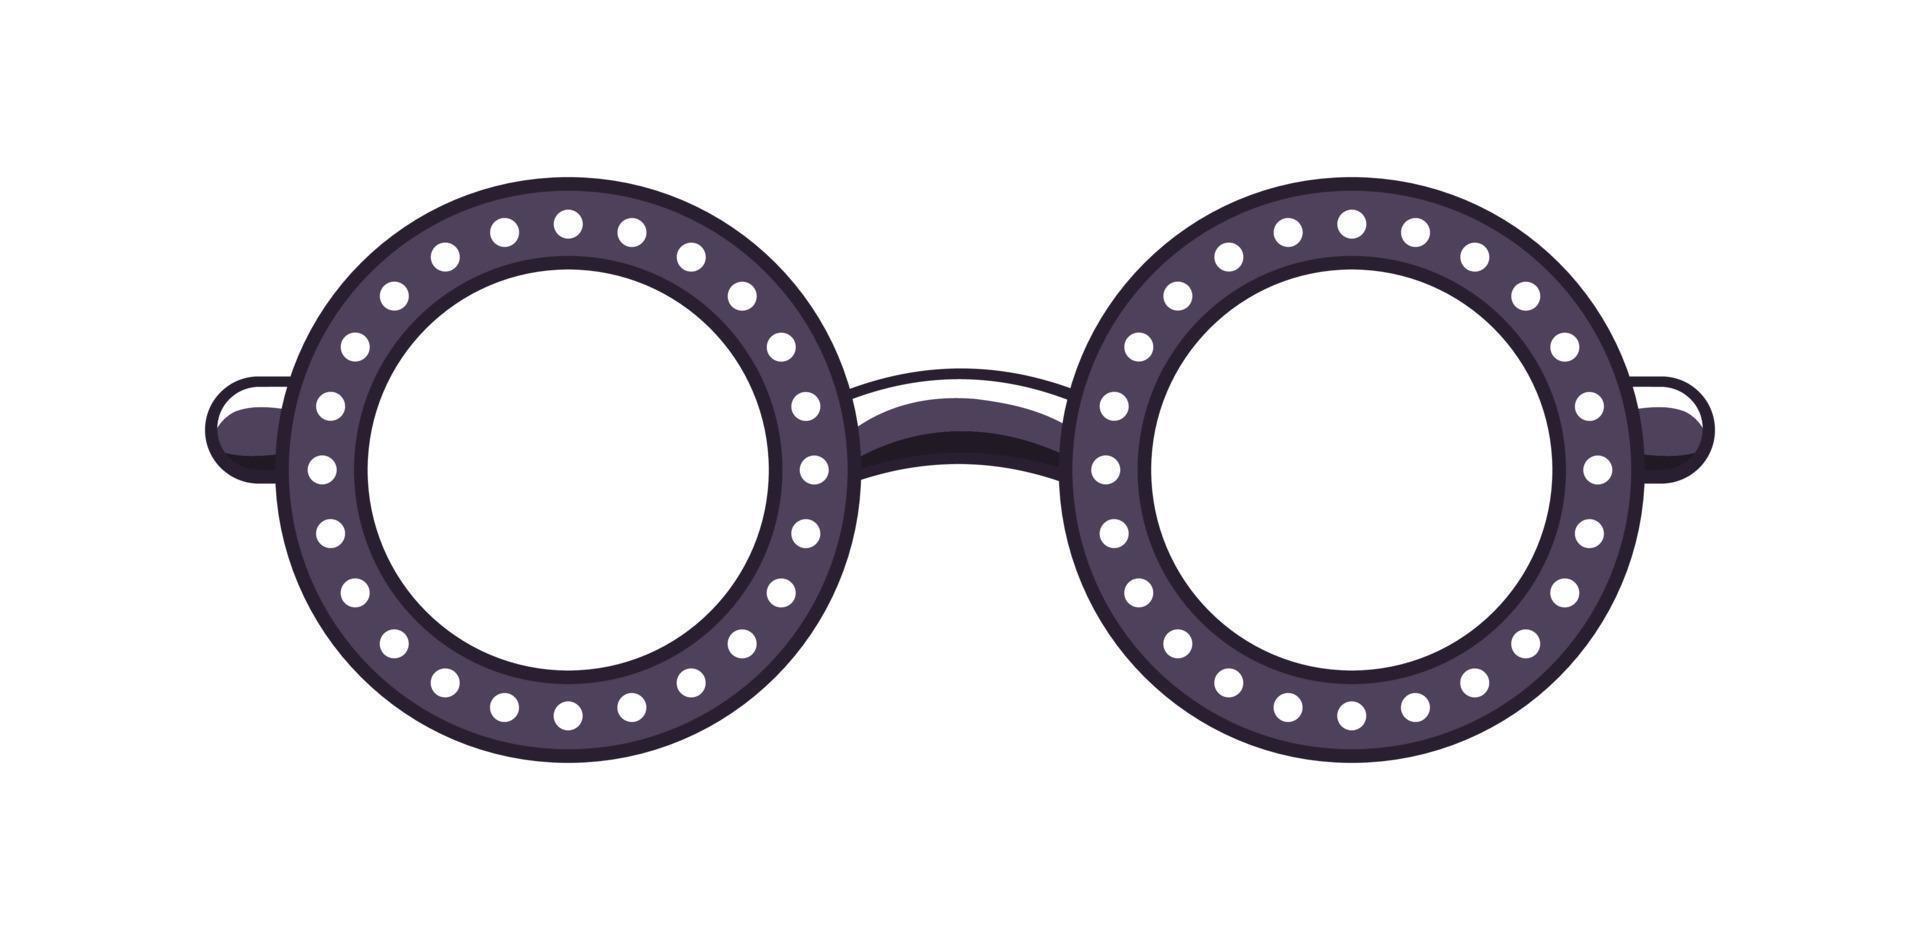 zwart ronde transparant bril kader met wit punt patroon clip art. funky partij bril eyewear tekenfilm vector illustratie.